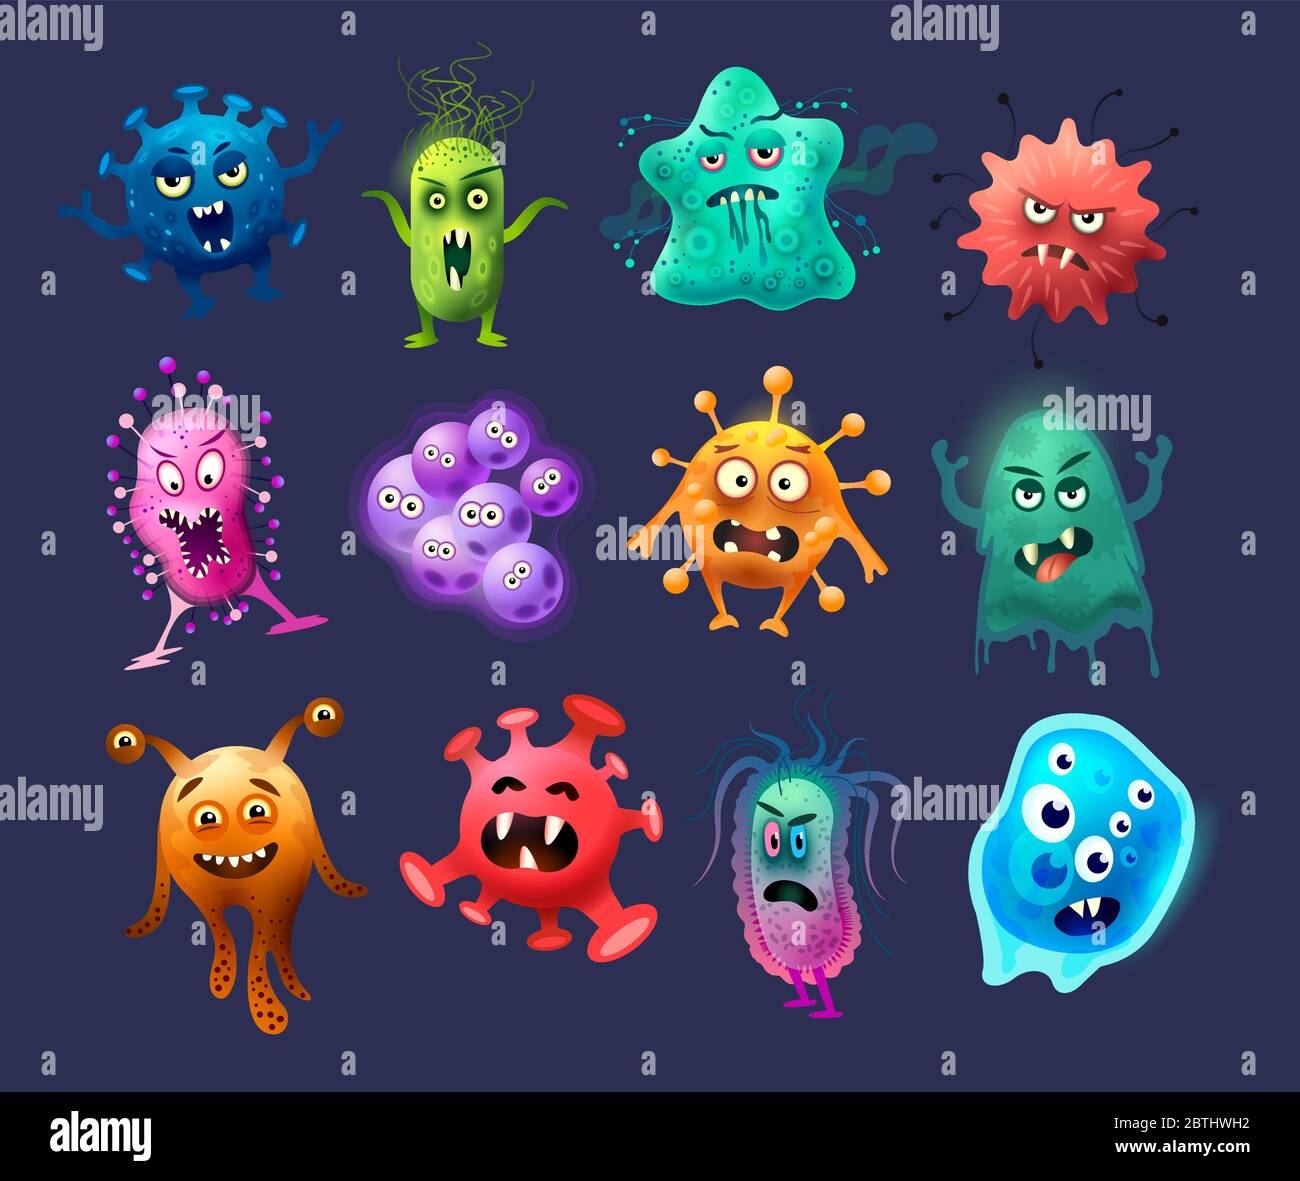 Eine Sammlung von seltsamen Virus, Keime und Bakterien Charakter Monster Cartoons. Vektorgrafik. Stock Vektor